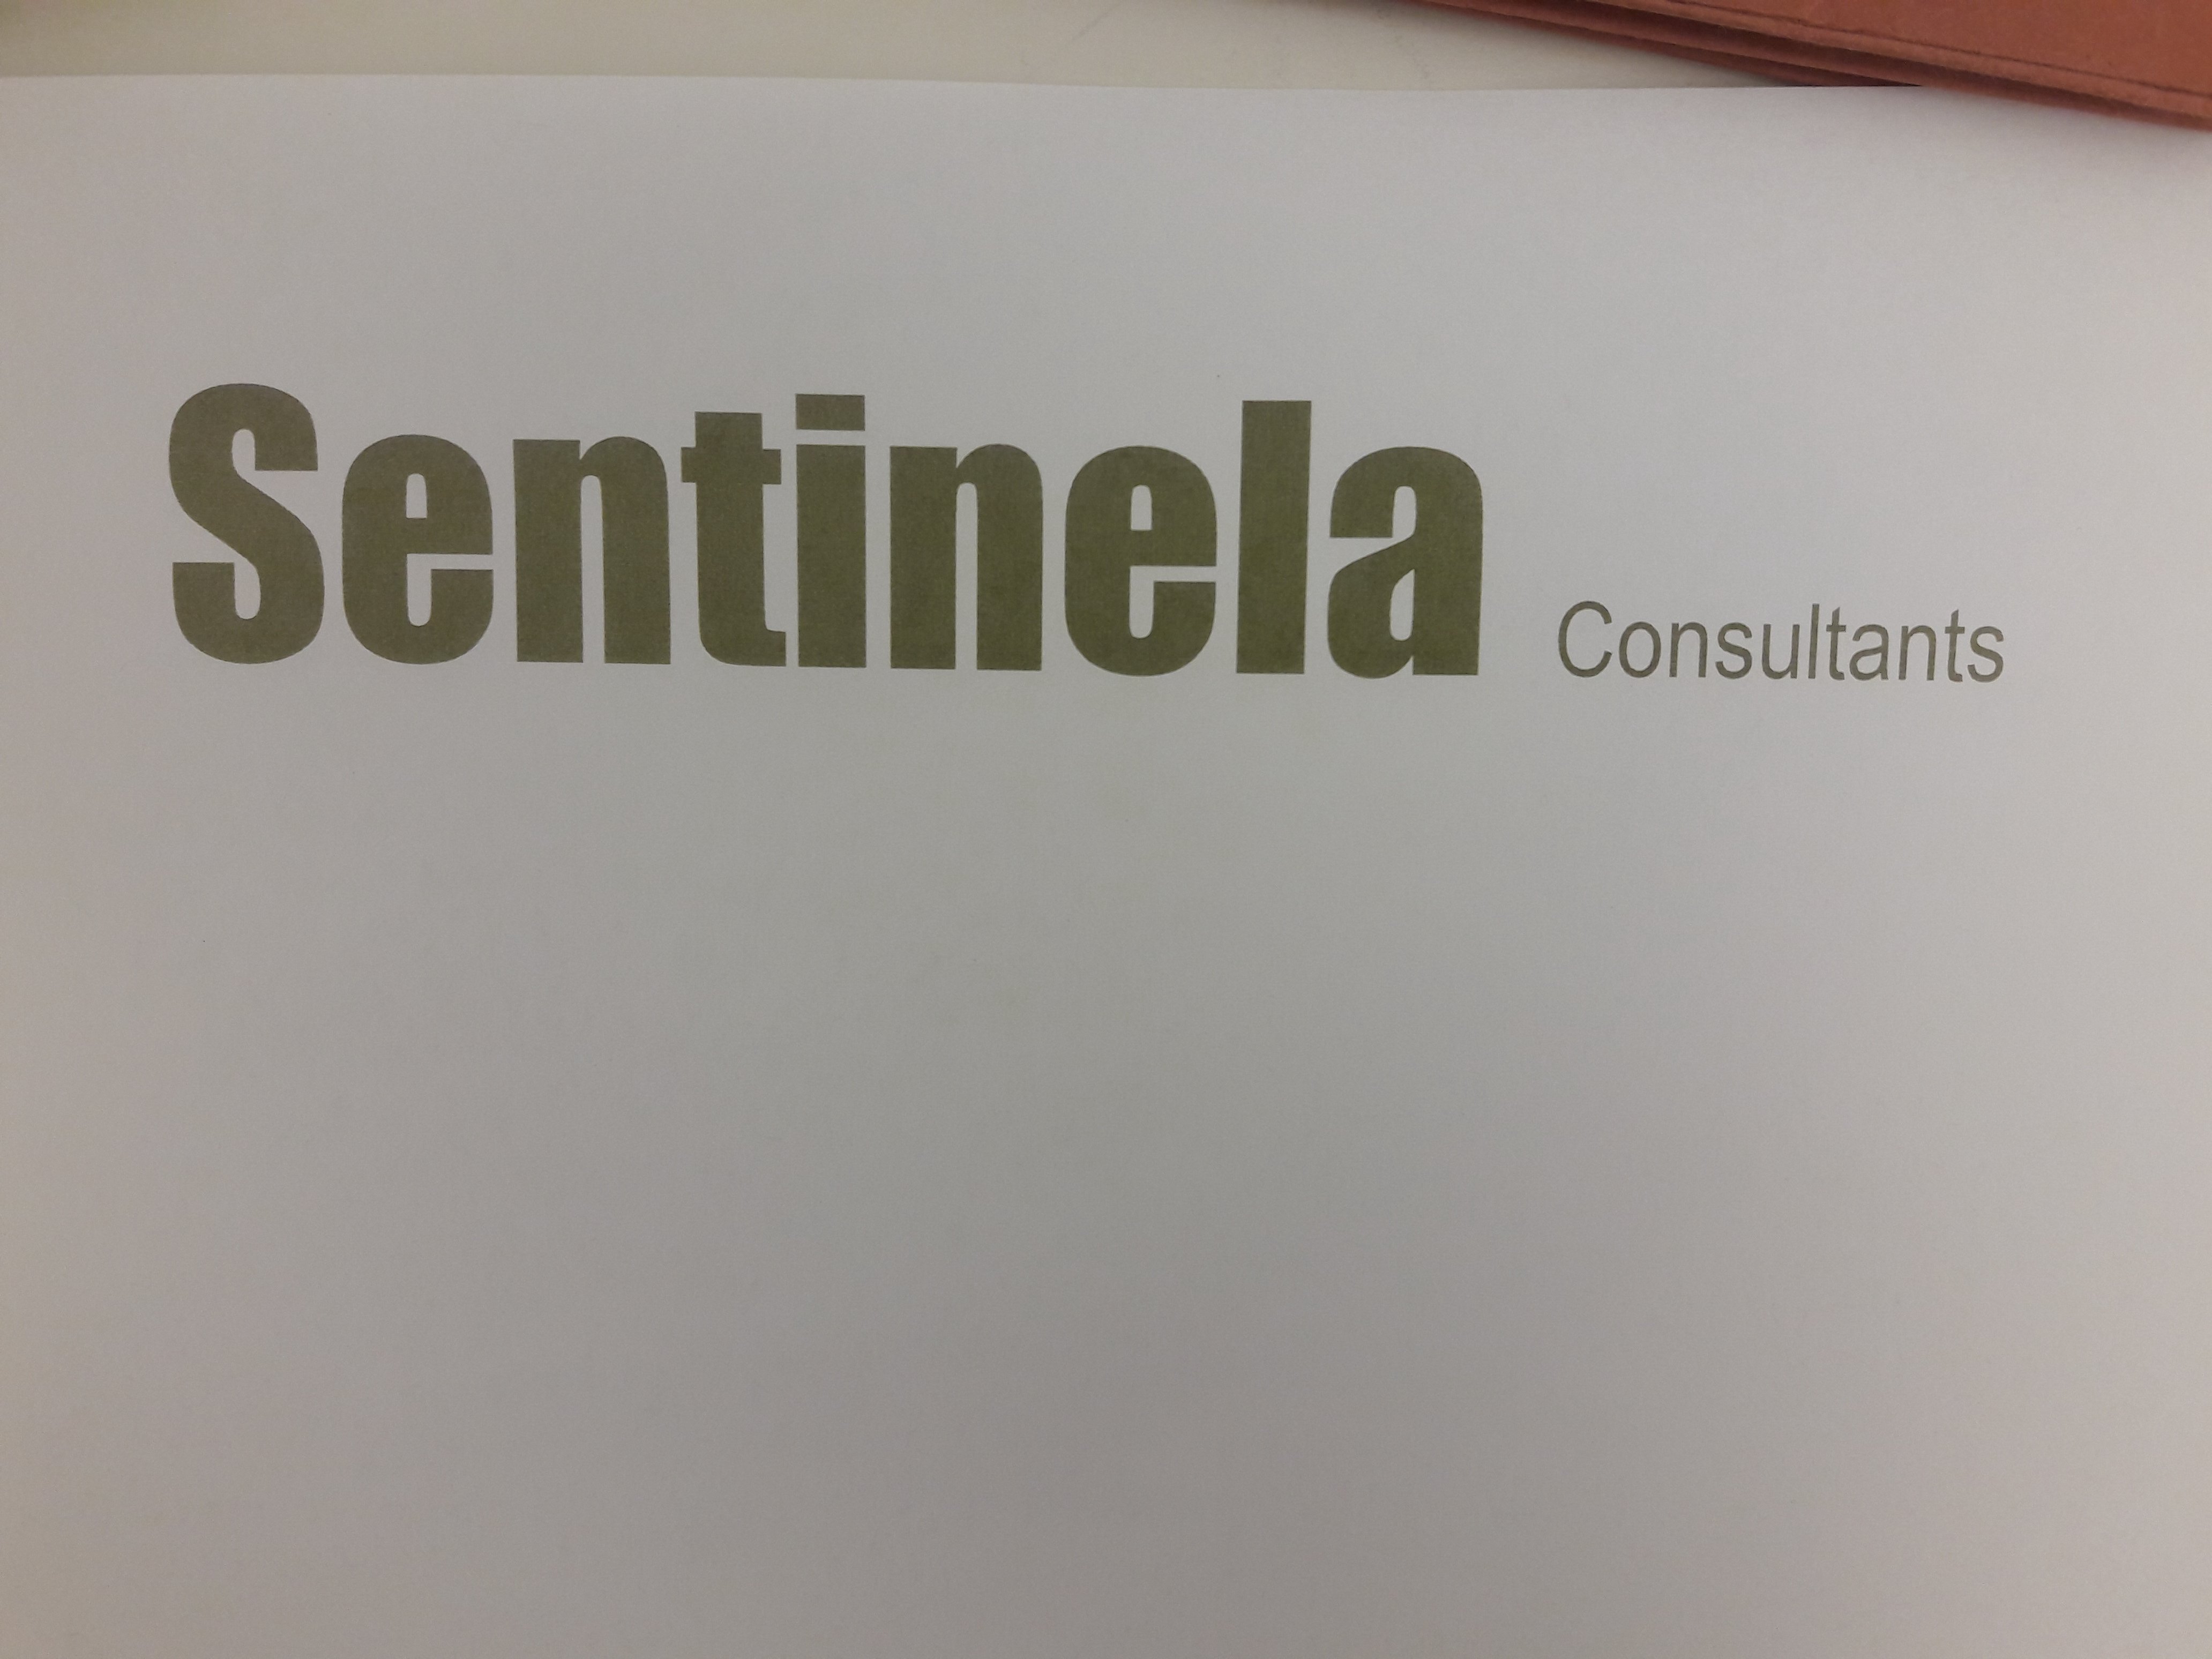  SENTINELA CONSULTANTS